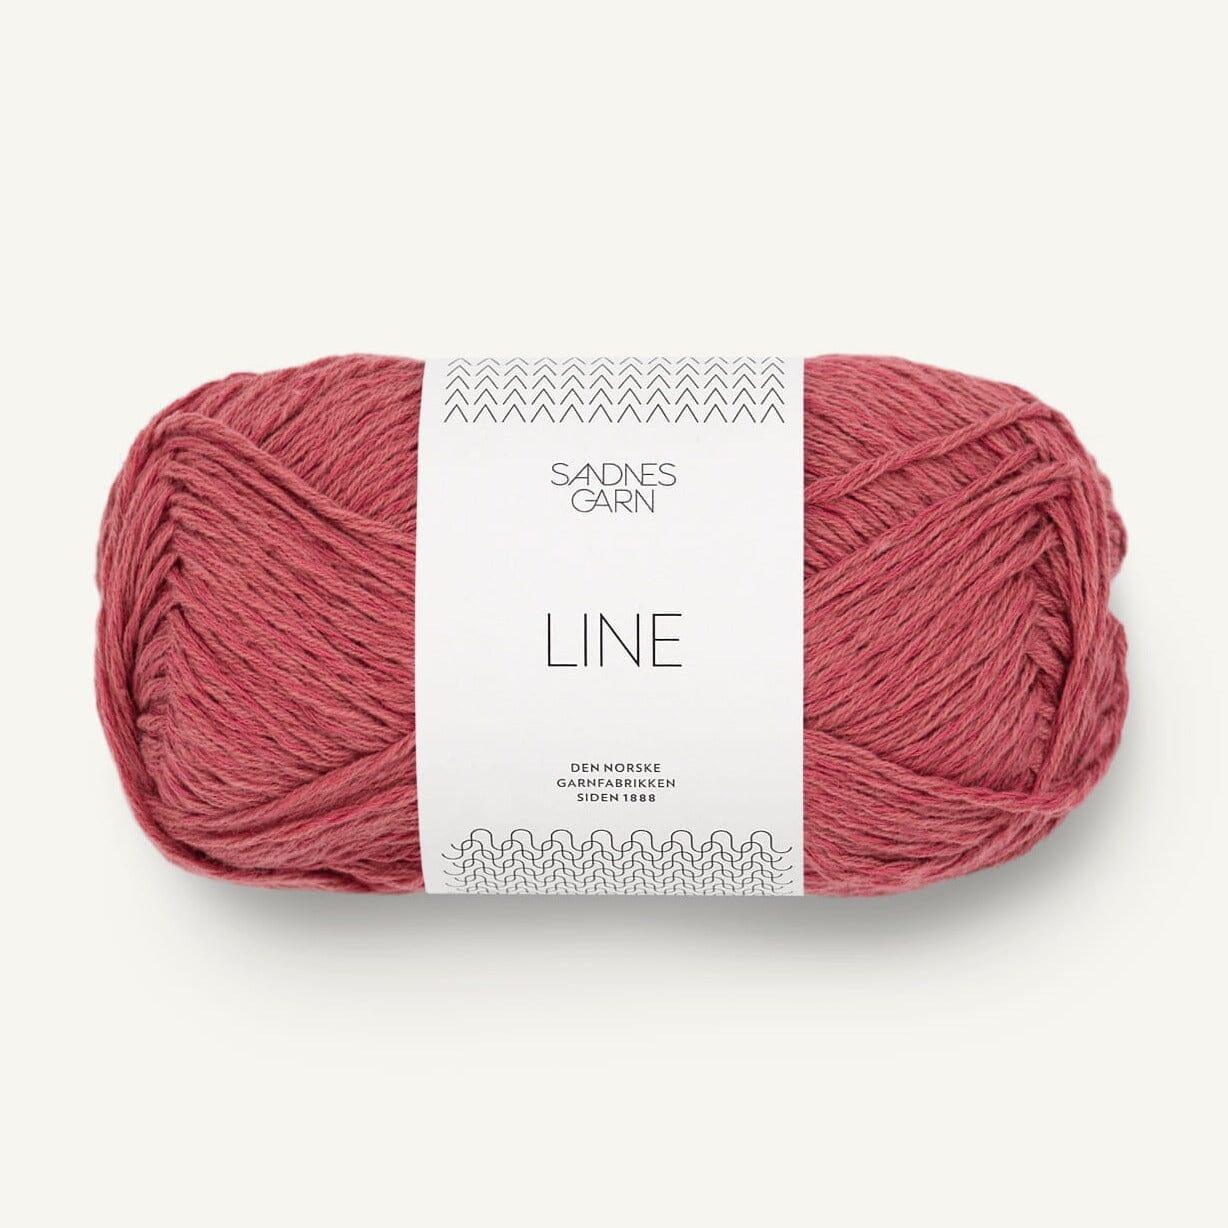 Sandnes Garn Line - Tangled Yarn